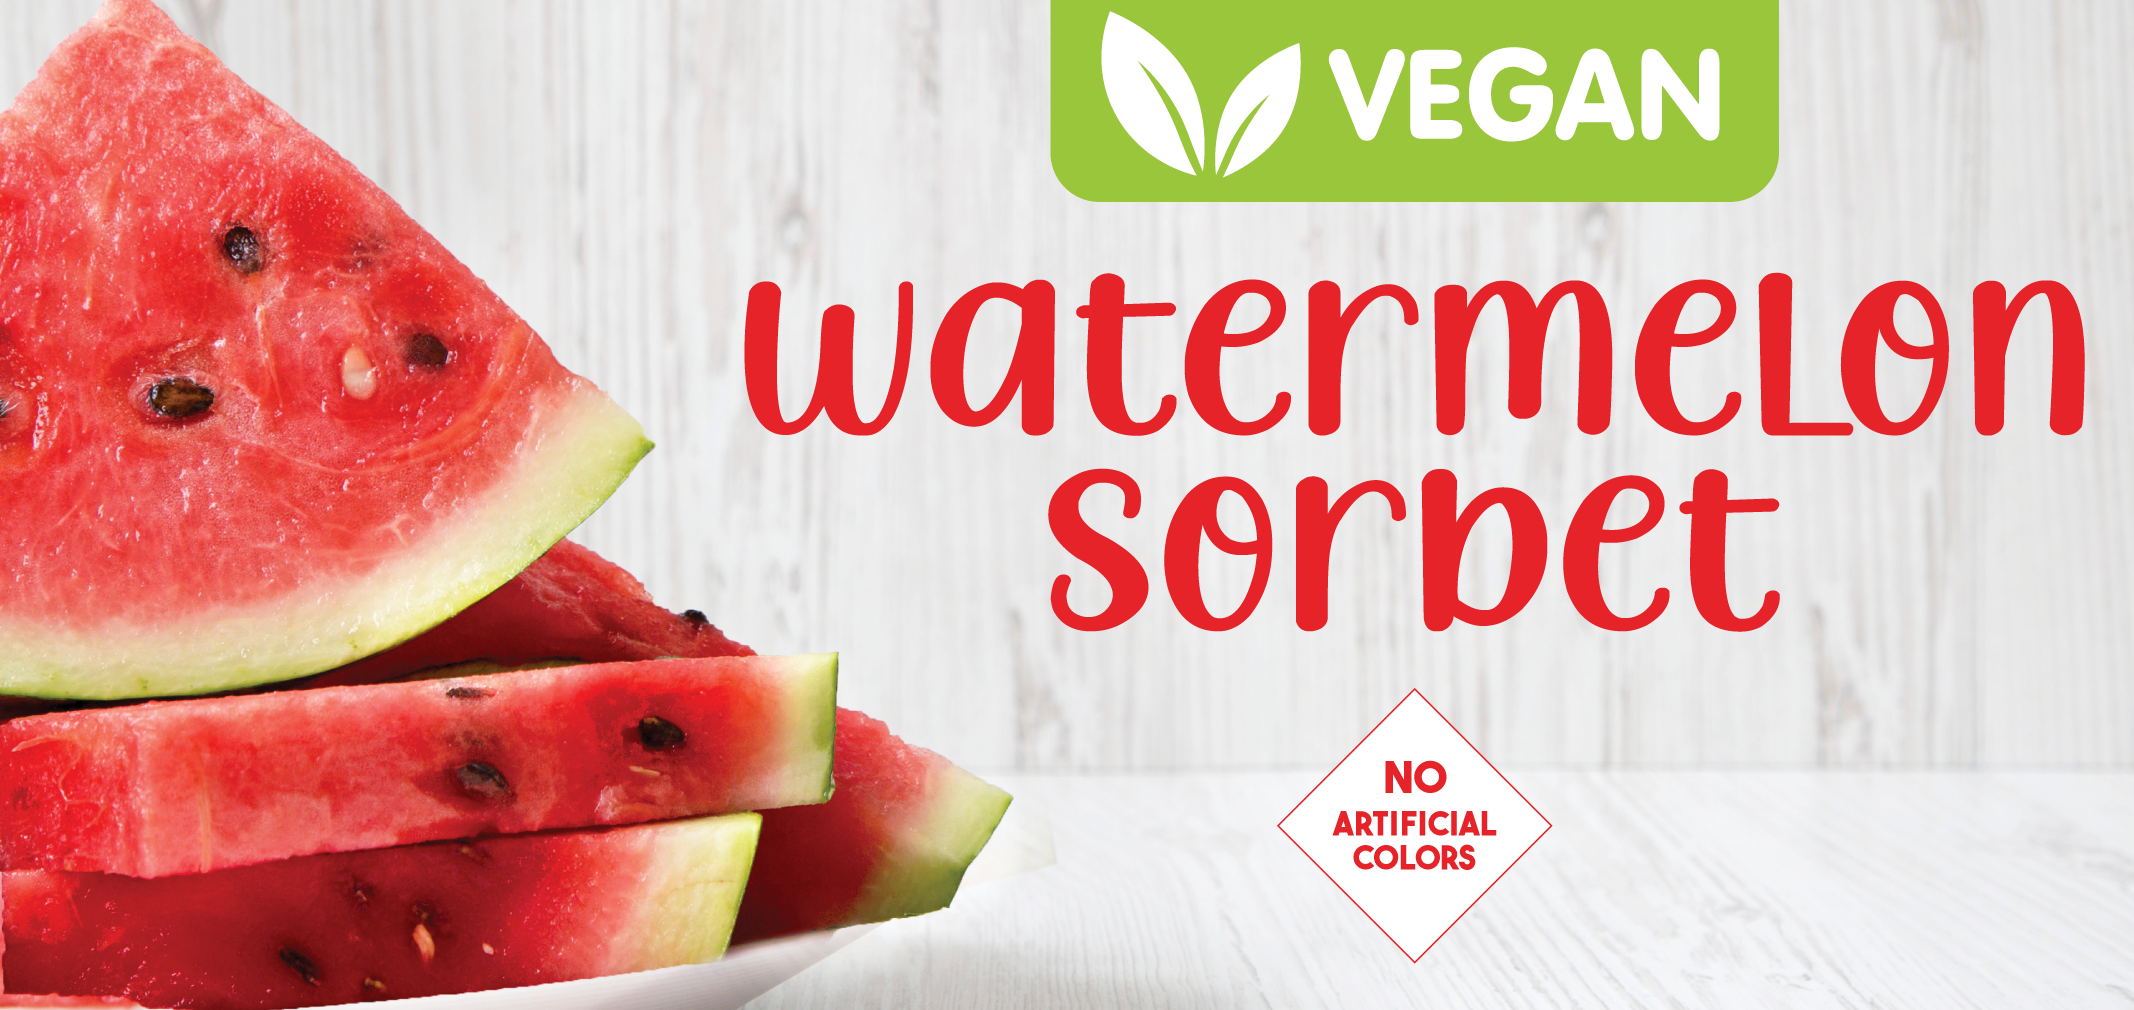 vegan watermelon sorbet label image